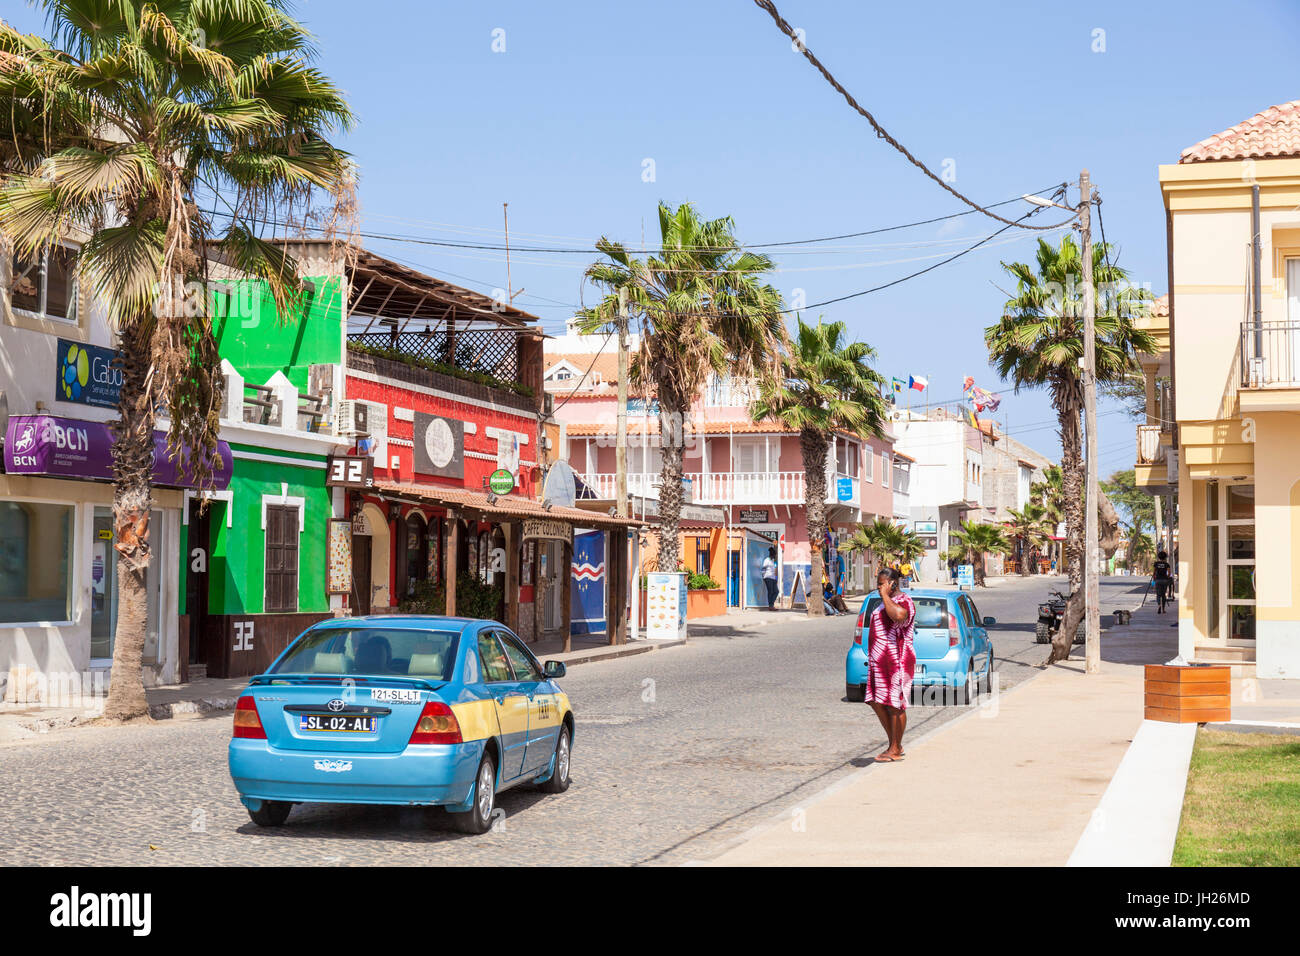 Local taxi driving down the main street, Rua 1 de Junho, Praca Central, Santa Maria, Sal island, Cape Verde, Africa Stock Photo